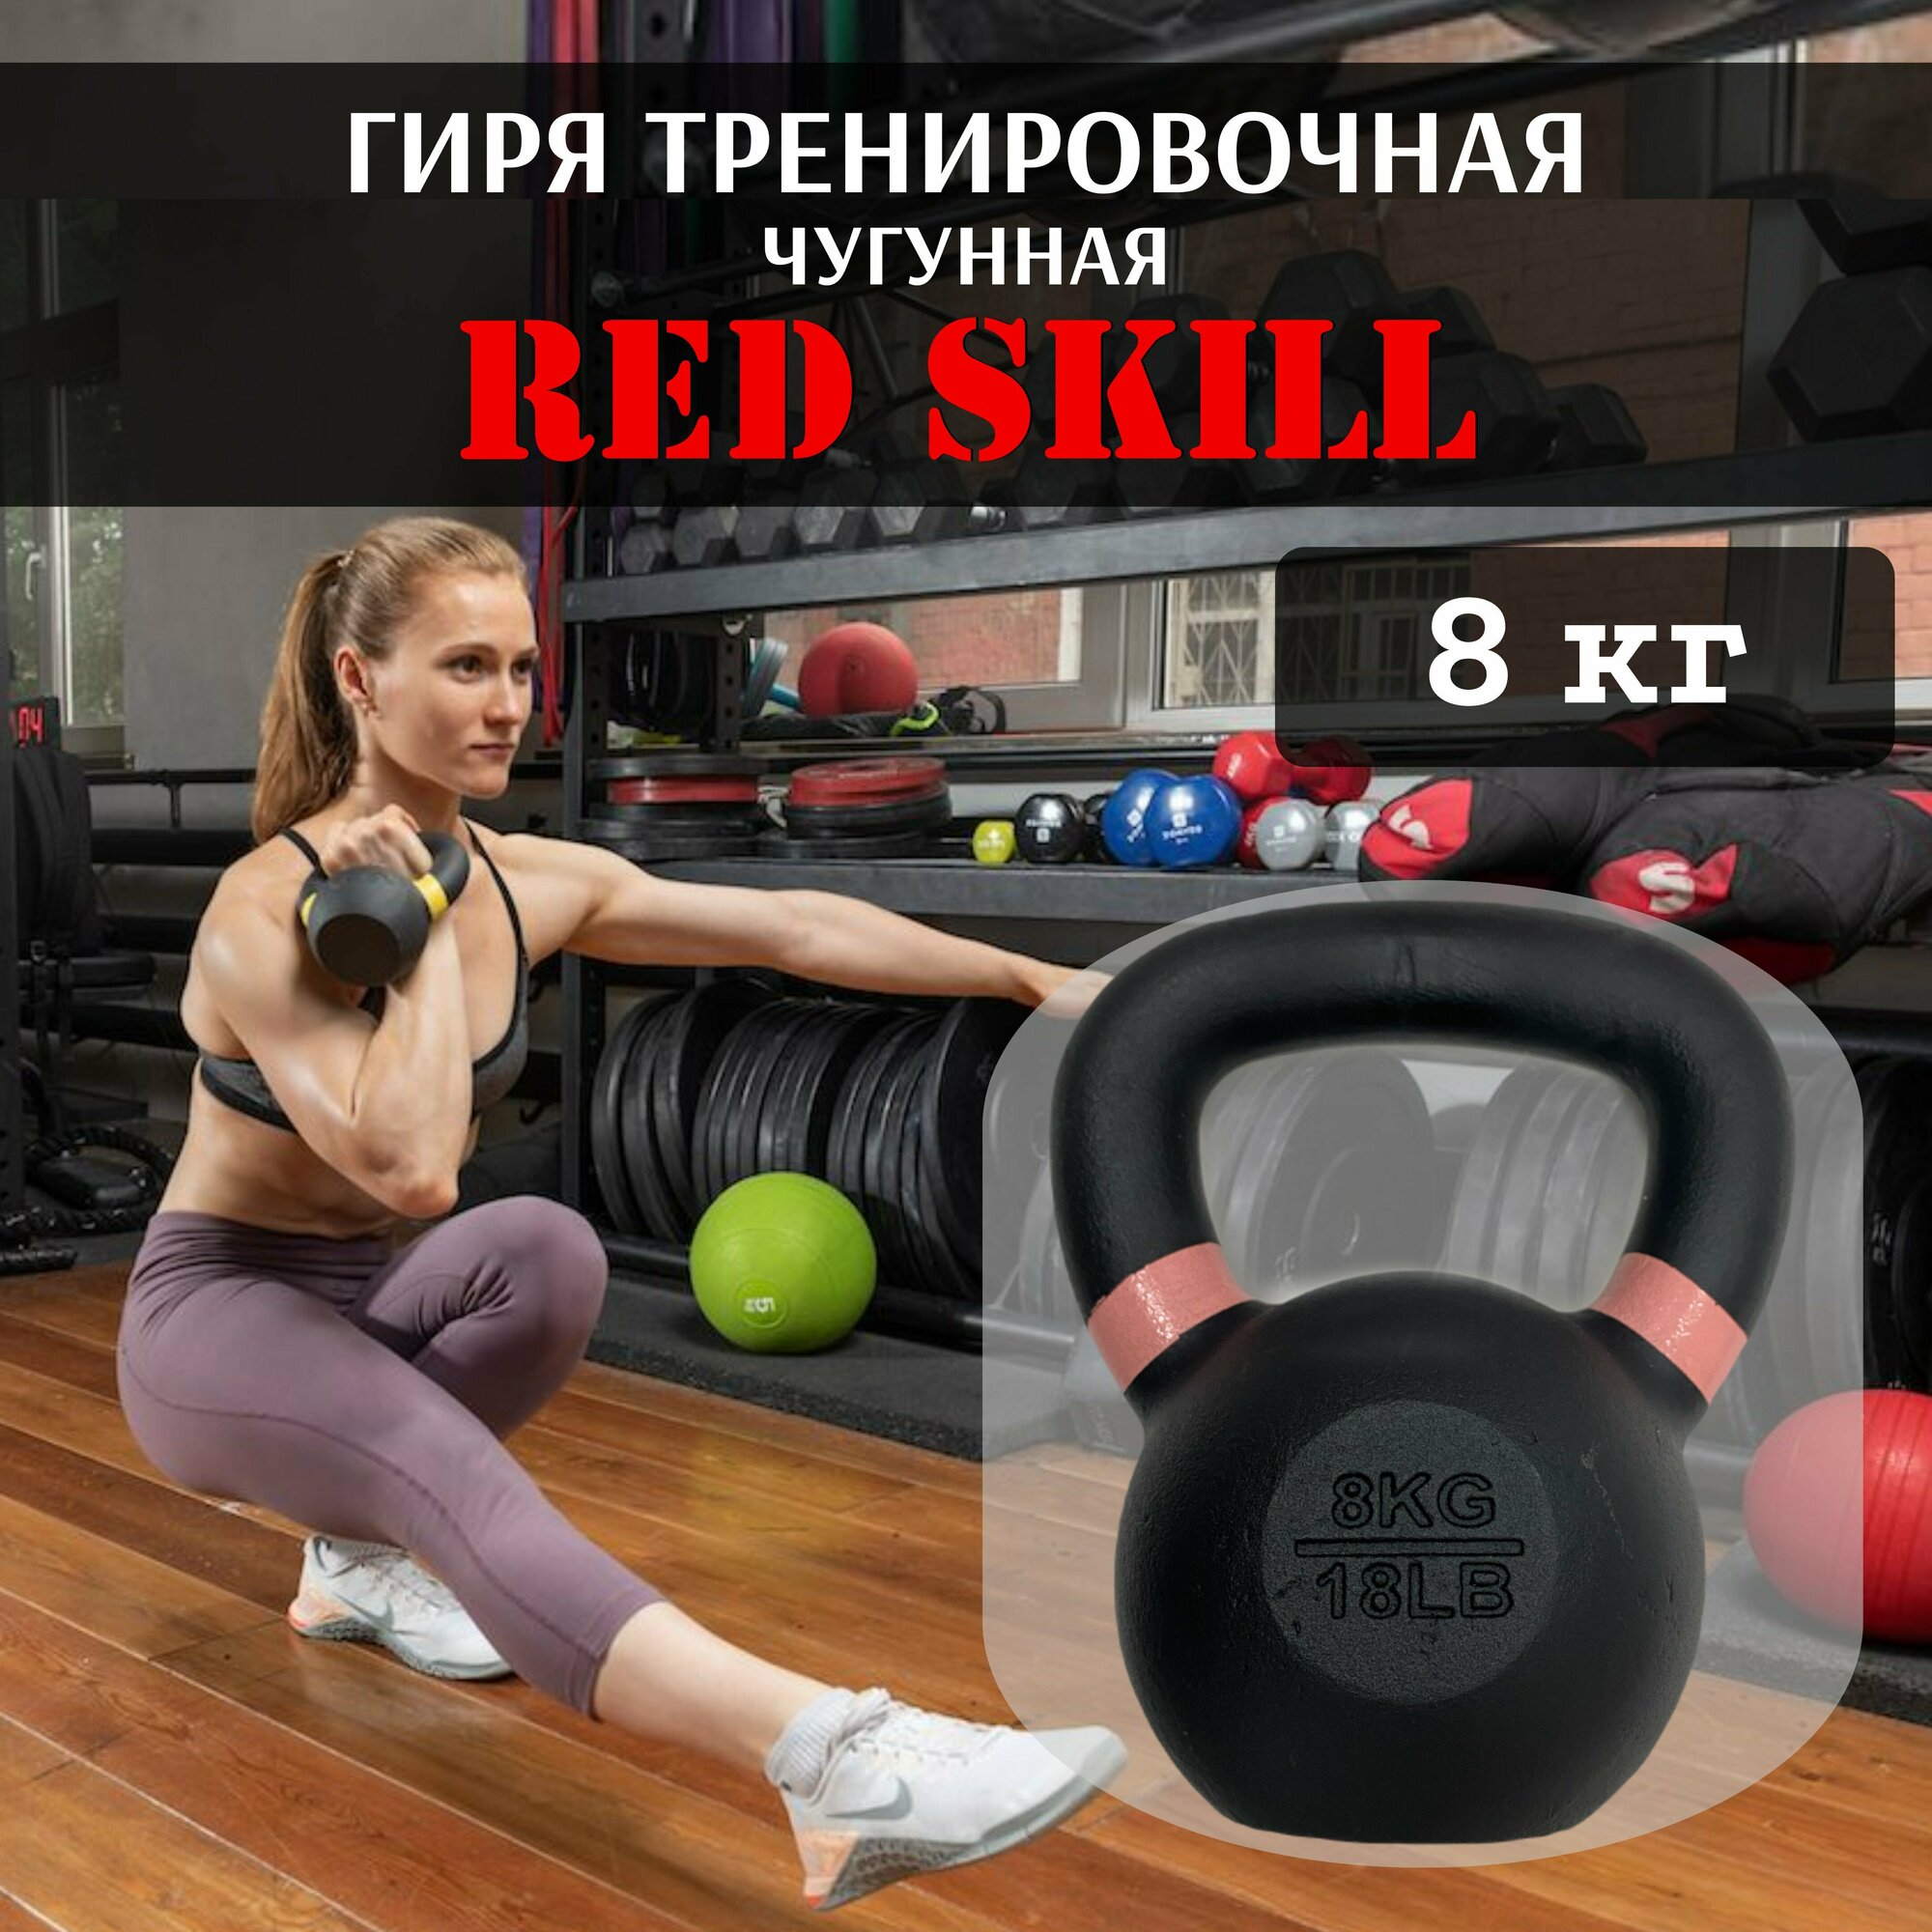 Гиря чугунная тренировочная RED Skill, 8 кг